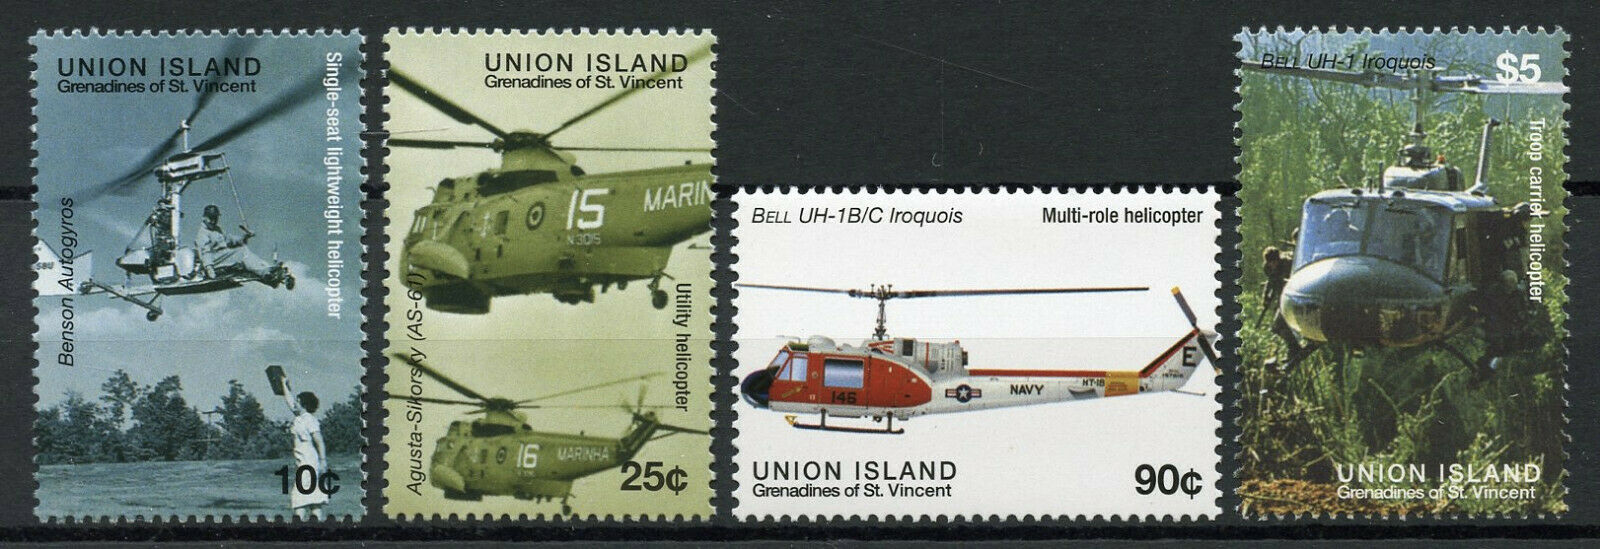 Union Island Gren St Vincent Aviation Stamps 2007 MNH Helicopters Flight 4v Set